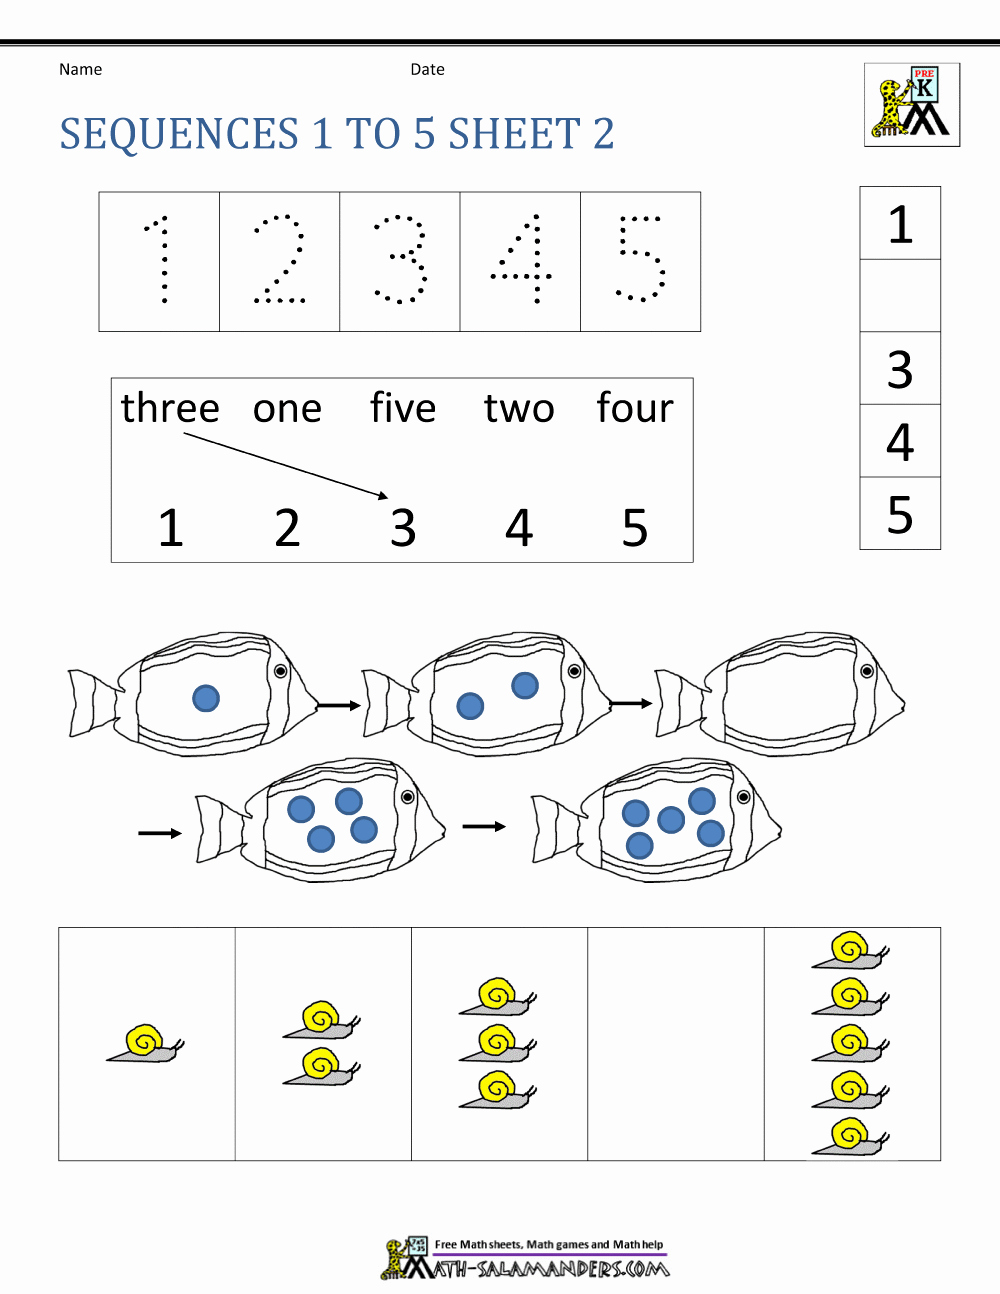 Sequencing Worksheets for Kindergarten Inspirational Preschool Number Worksheets Sequencing to 10